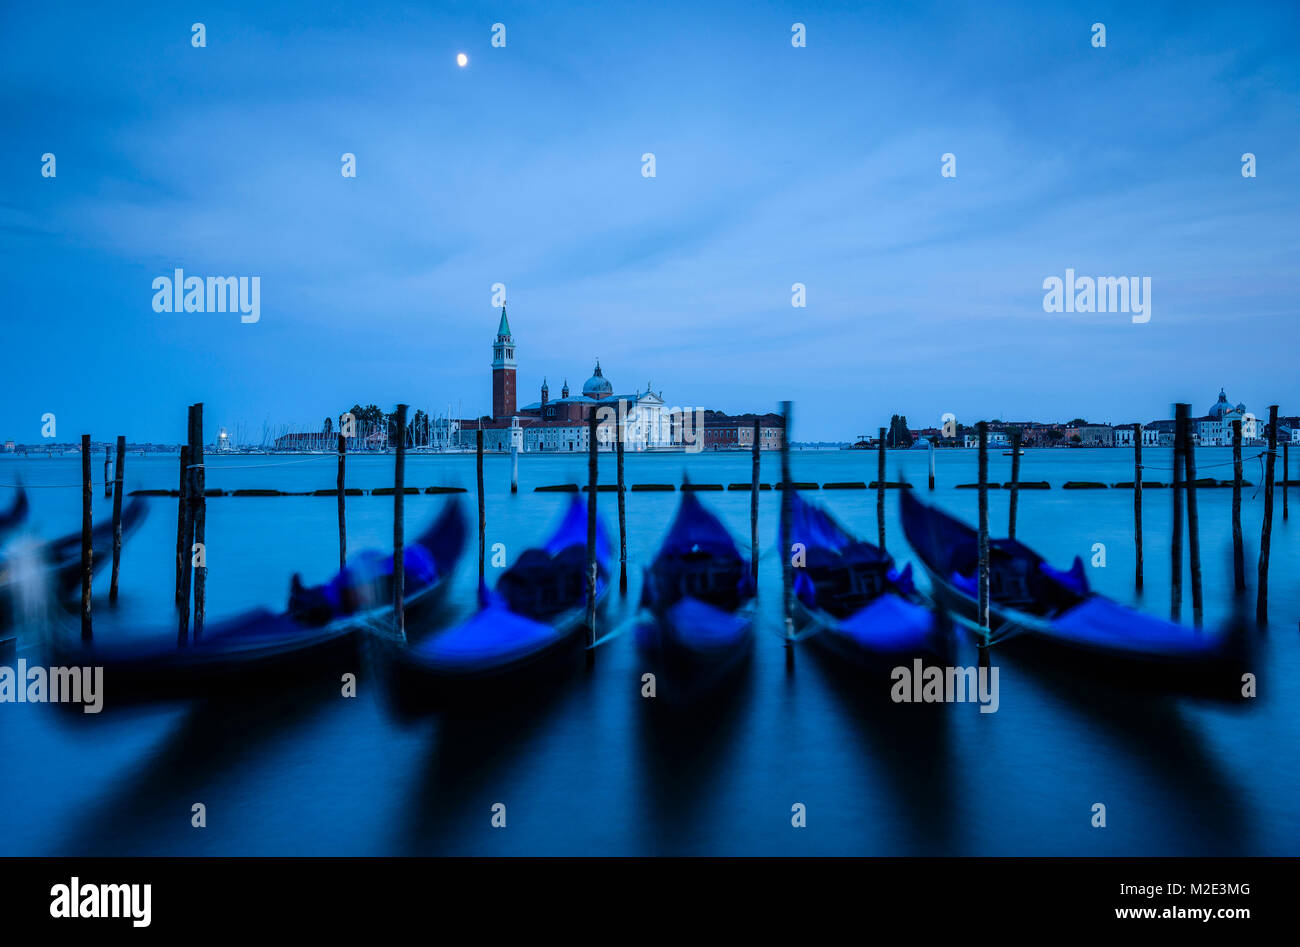 Blue gondolas at night Stock Photo